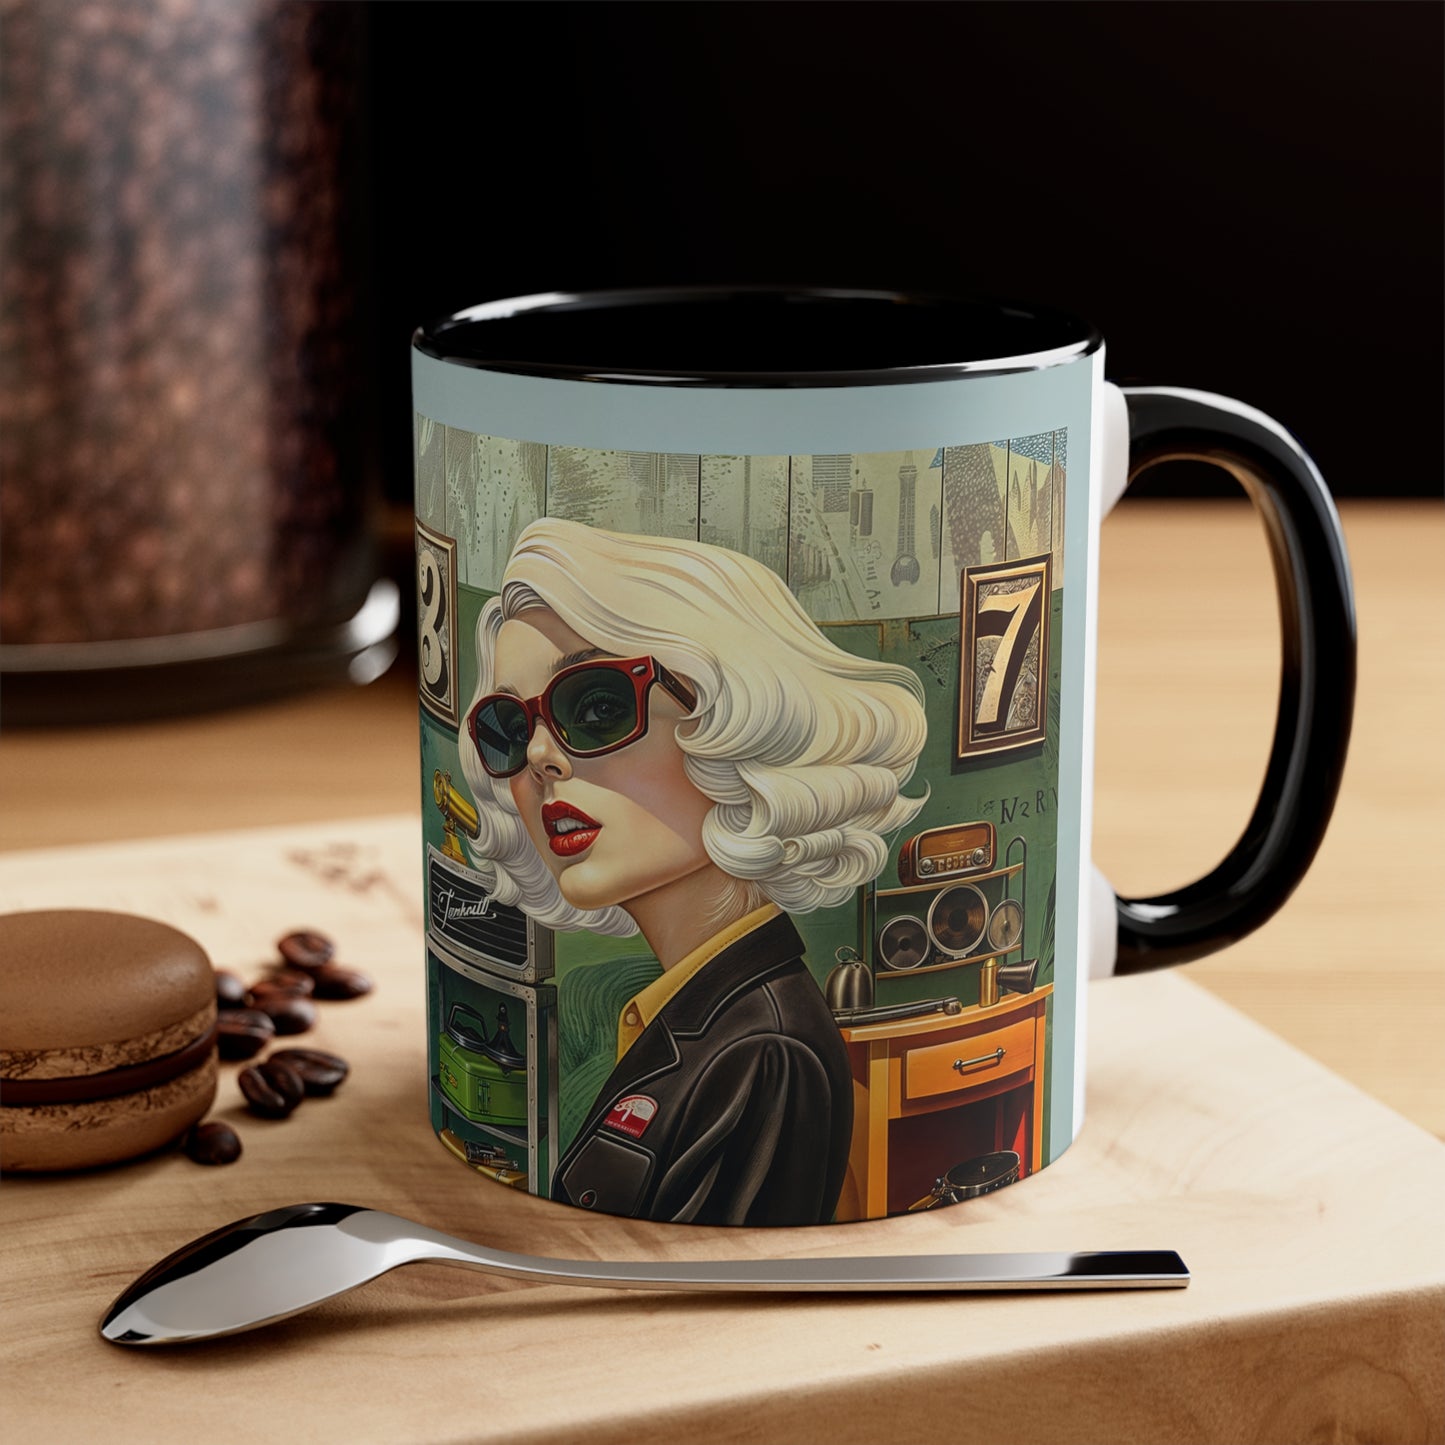 Accent Coffee Mug, 11oz - Tool Time Blonde black in situ